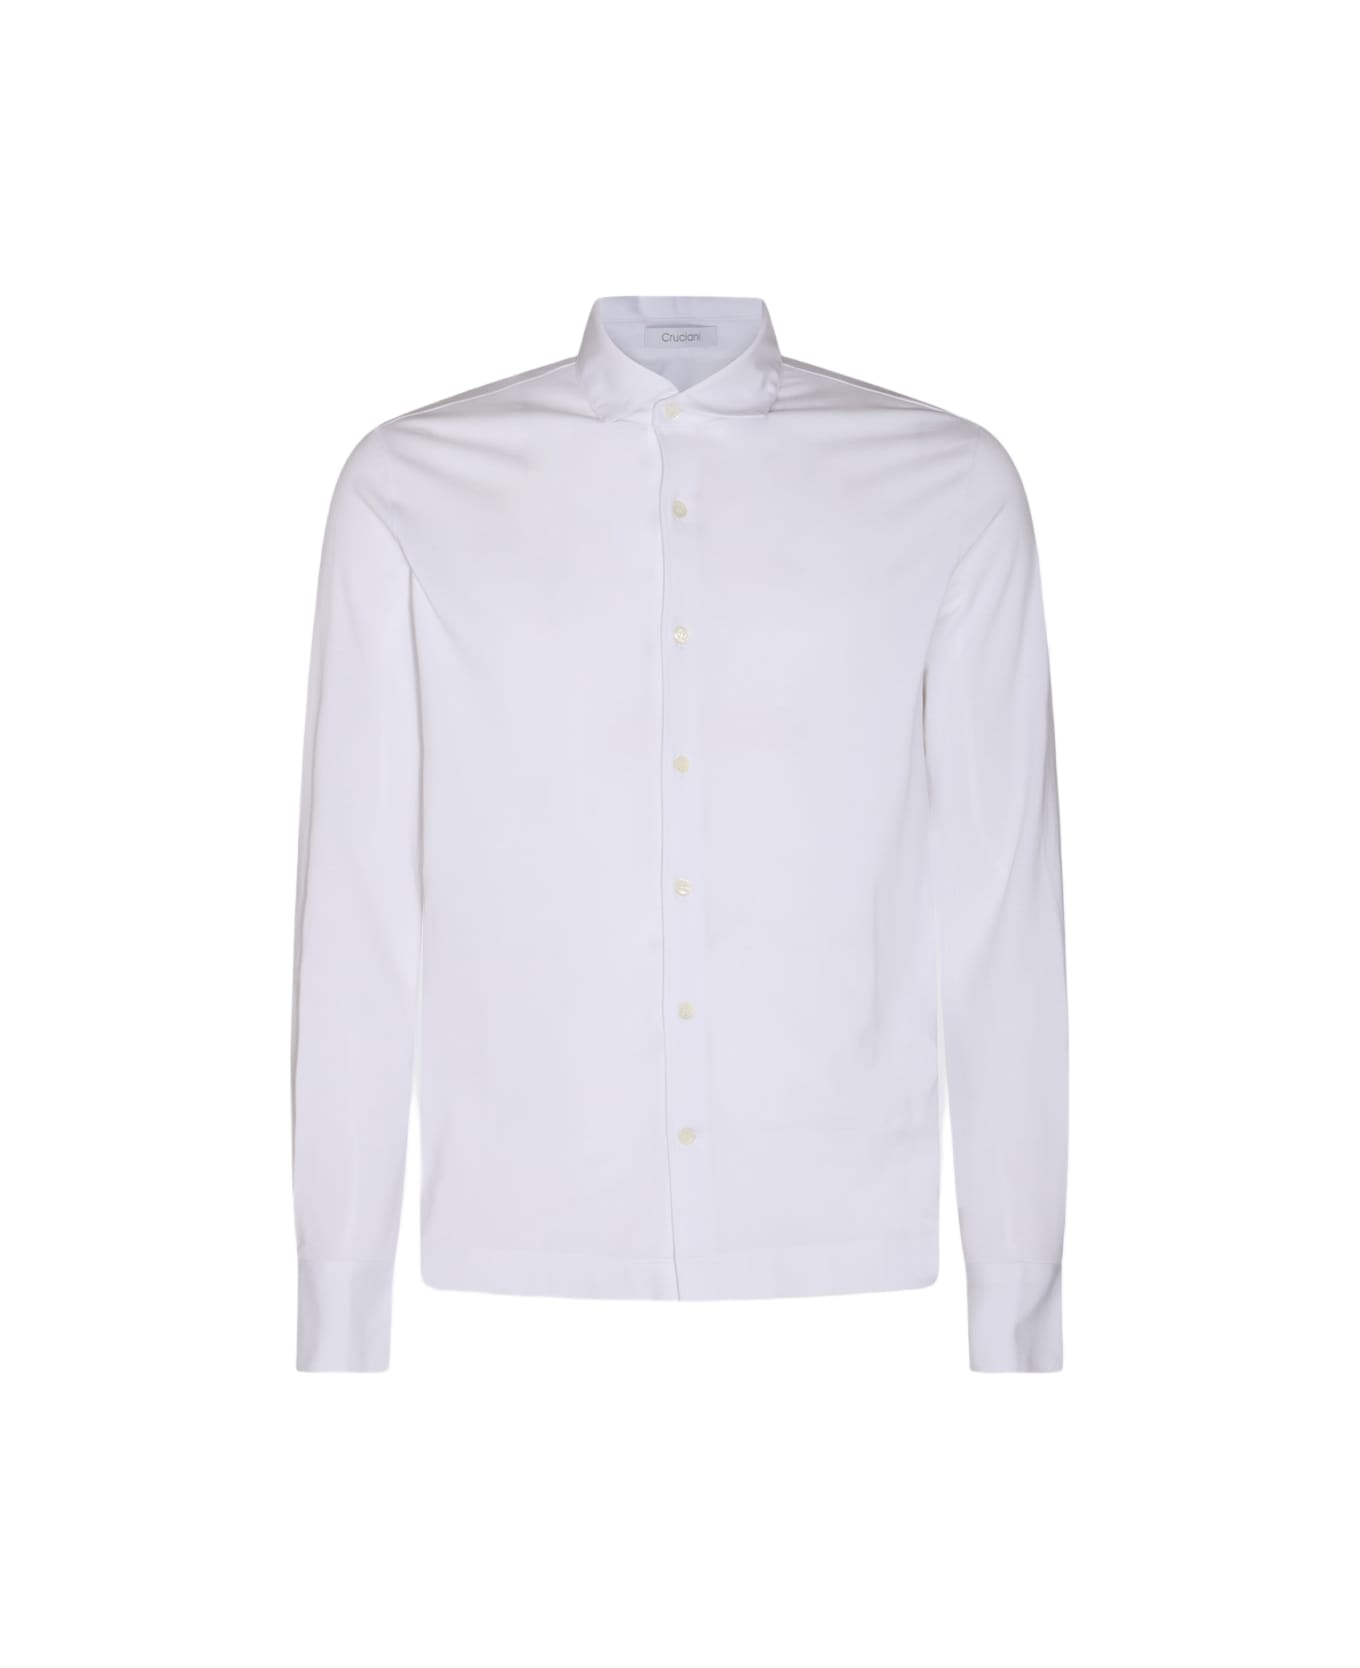 Cruciani White Cotton Shirt - White